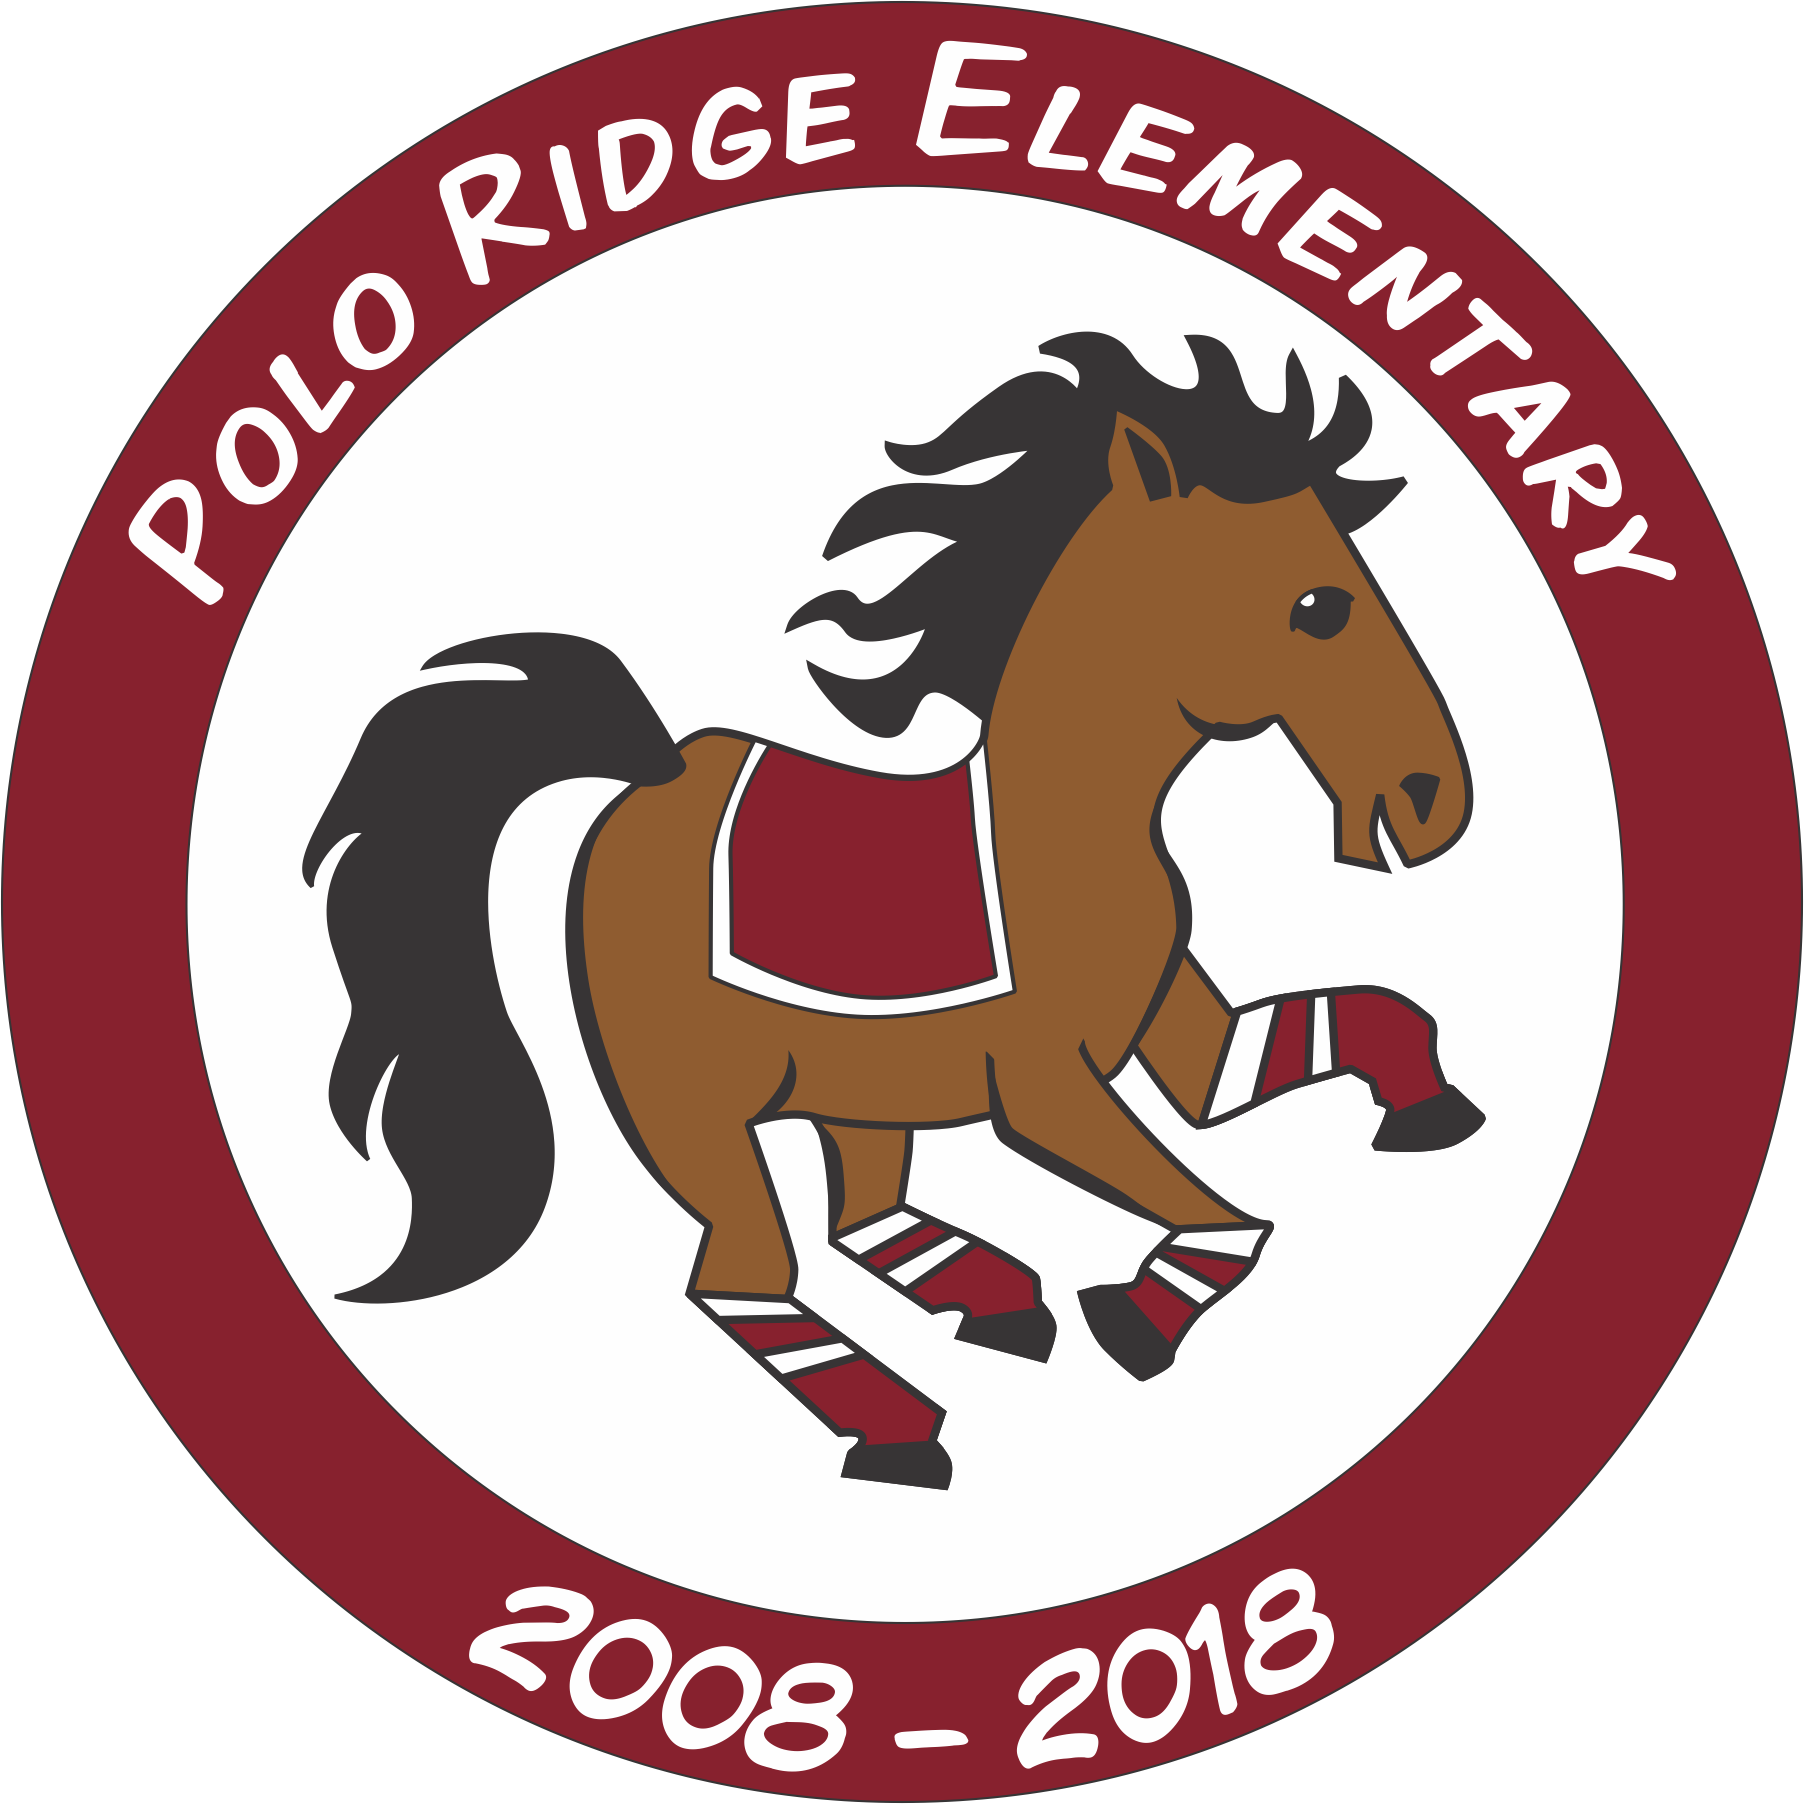 Polo Ridge Circle - Parent-teacher Association (1804x1804)